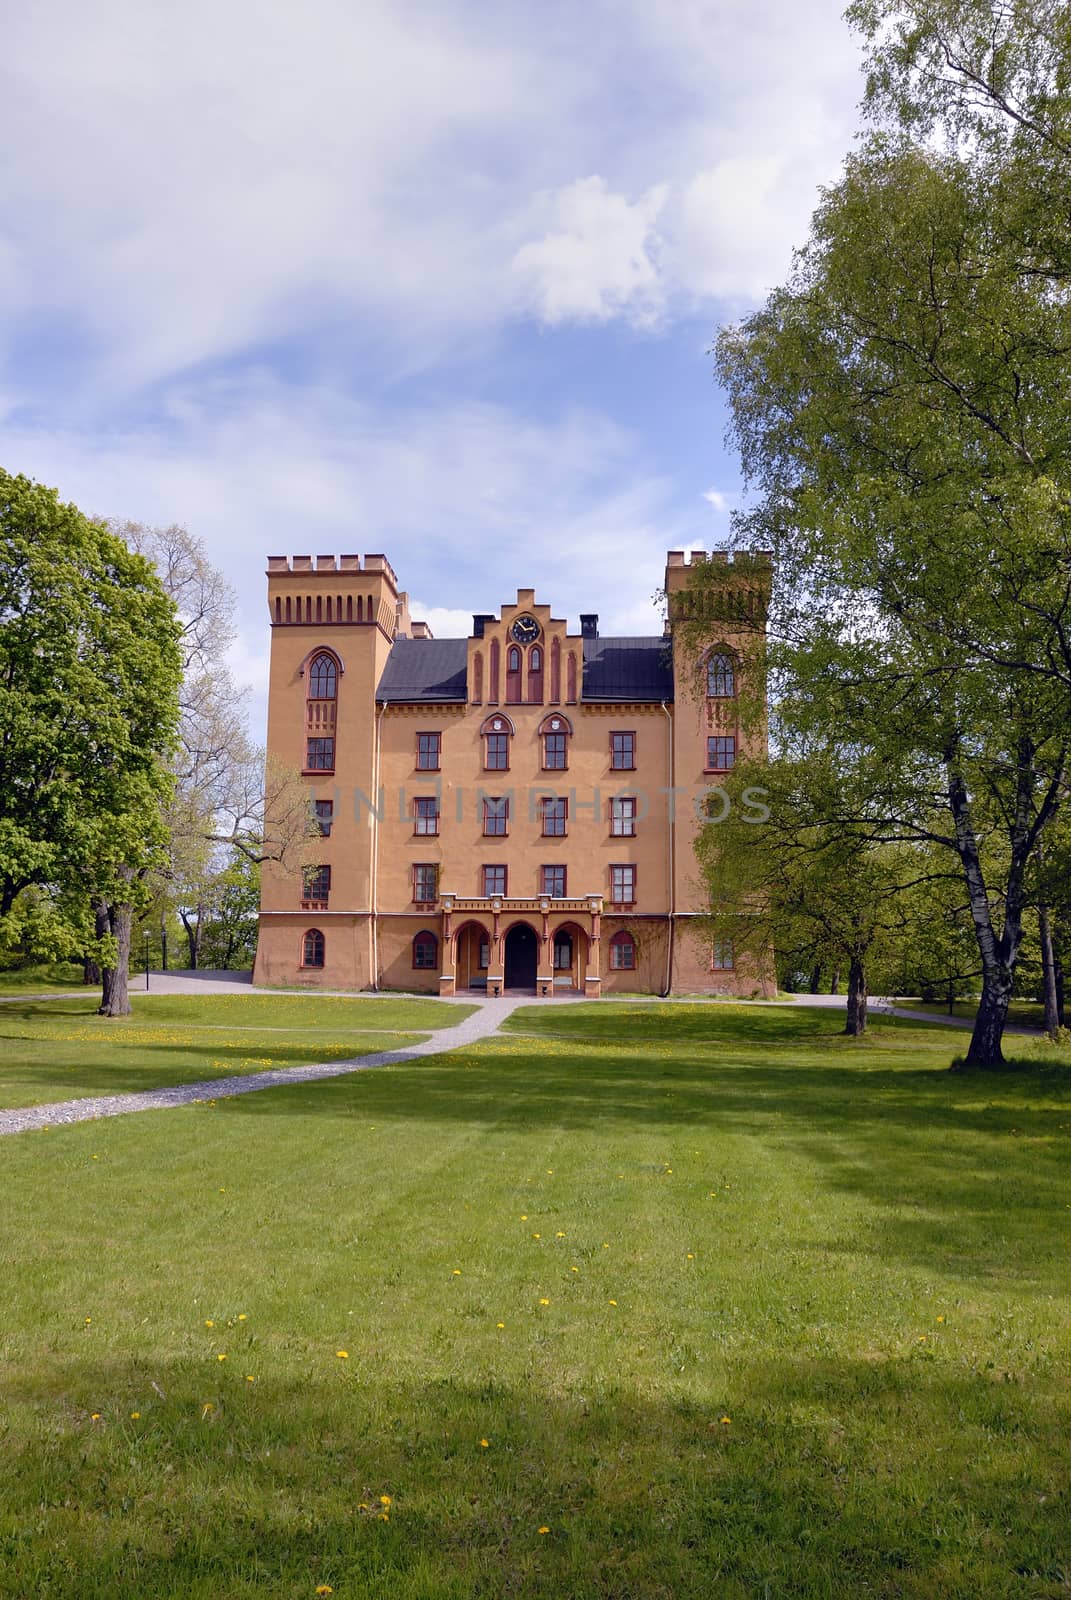 The palace of Bogesund in Sweden.